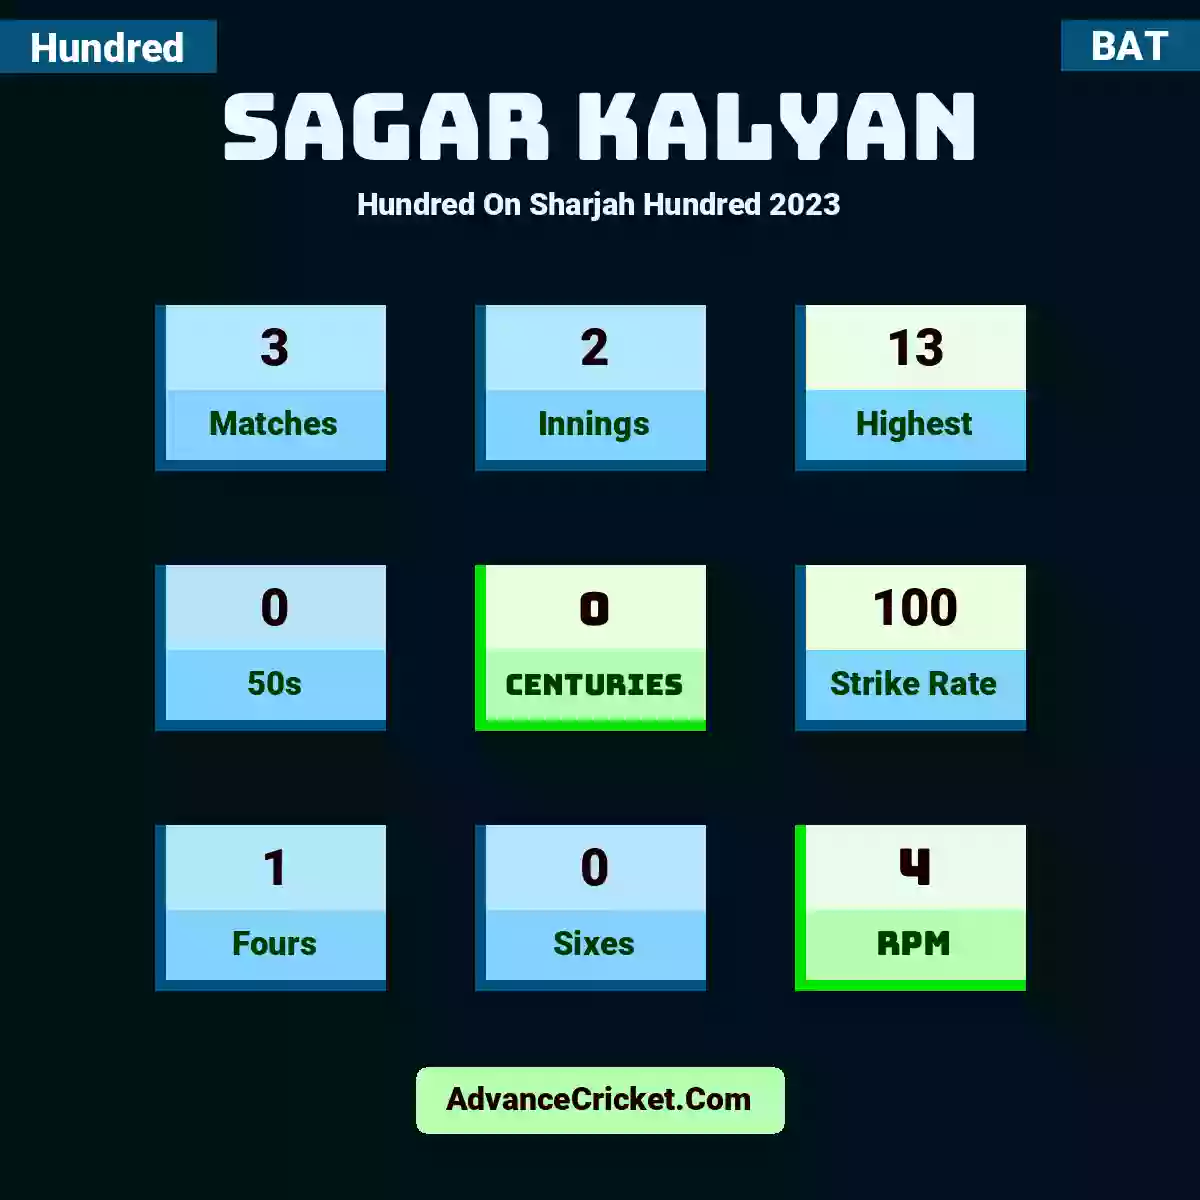 Sagar Kalyan Hundred  On Sharjah Hundred 2023, Sagar Kalyan played 3 matches, scored 13 runs as highest, 0 half-centuries, and 0 centuries, with a strike rate of 100. S.Kalyan hit 1 fours and 0 sixes, with an RPM of 4.